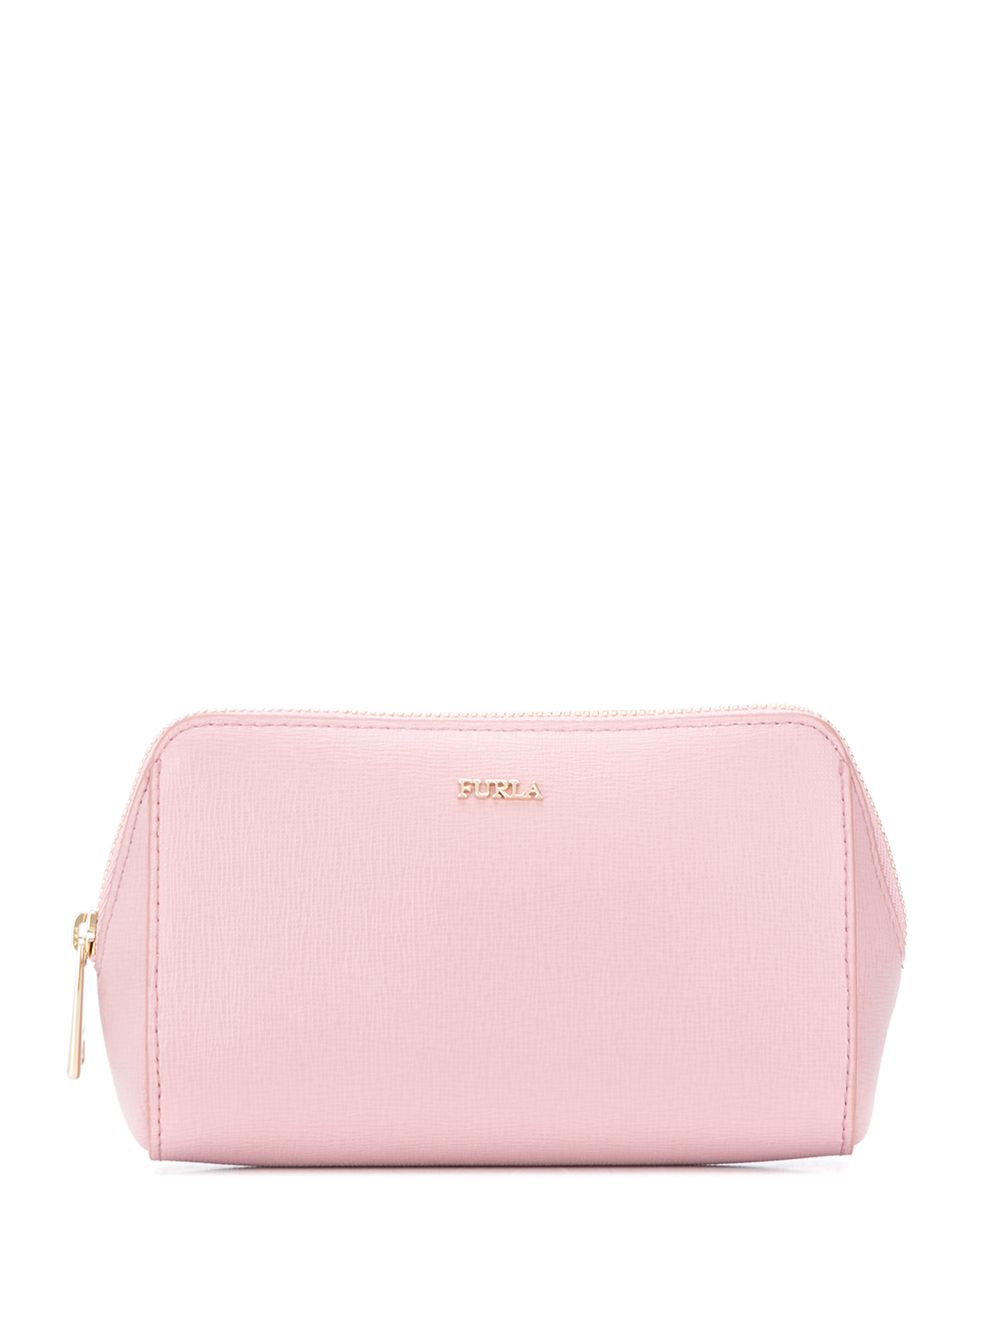 Furla Electra Cosmetic Bag In Rosa | ModeSens